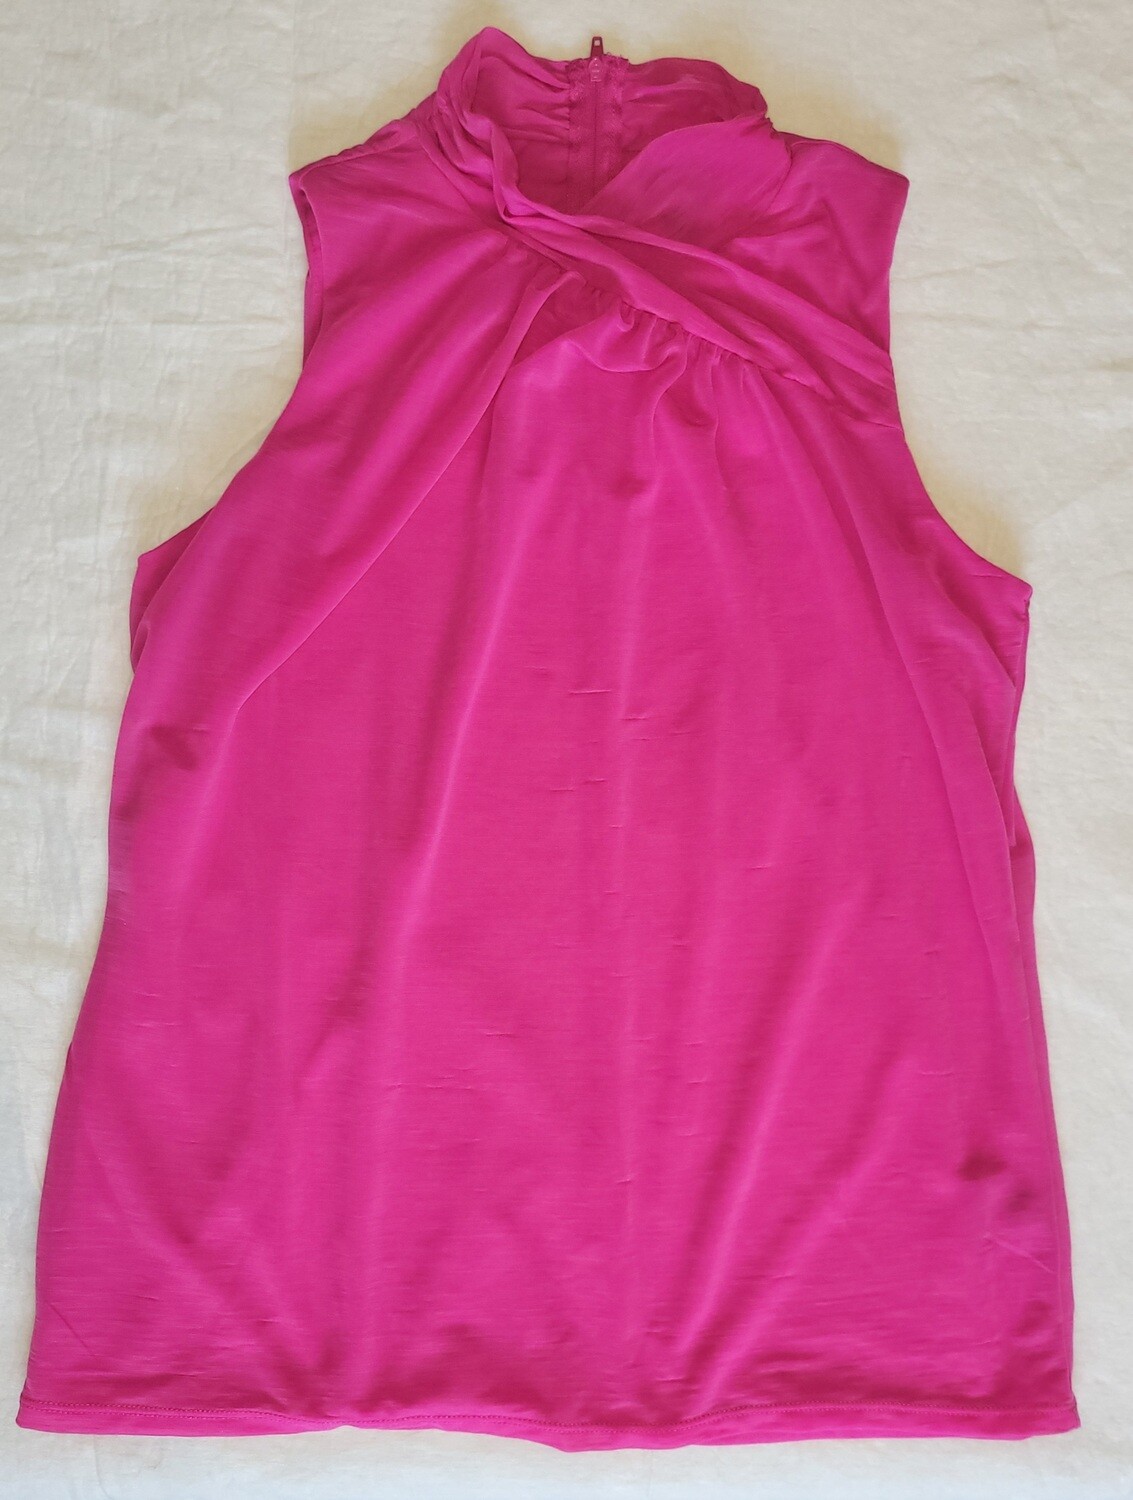 Sleveless Pink Dress Top